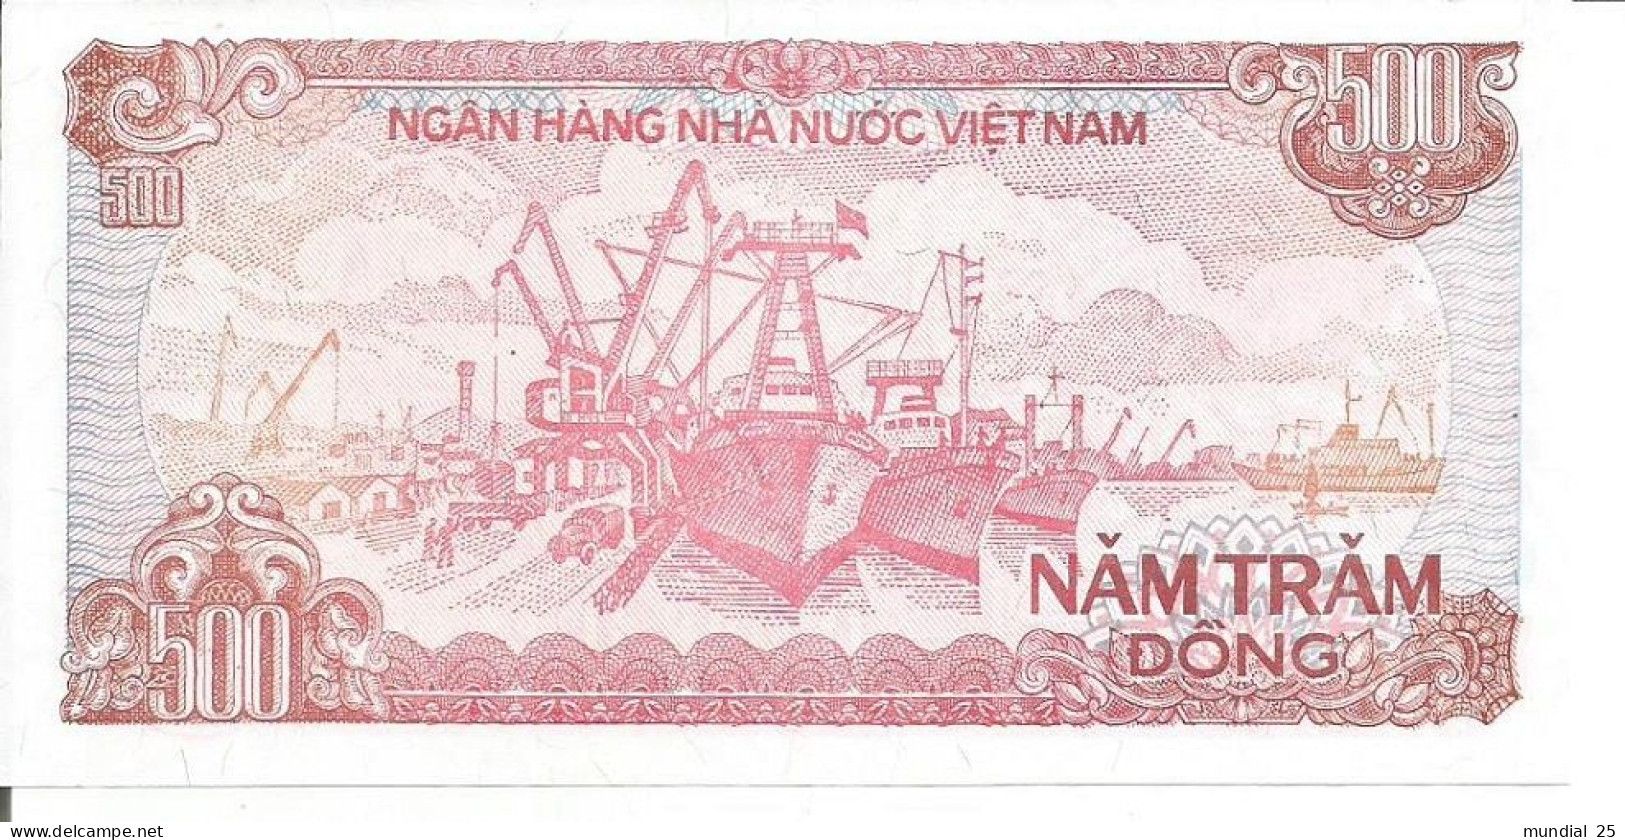 3 VIETNAM NOTES 500 DONG 1988 - Vietnam